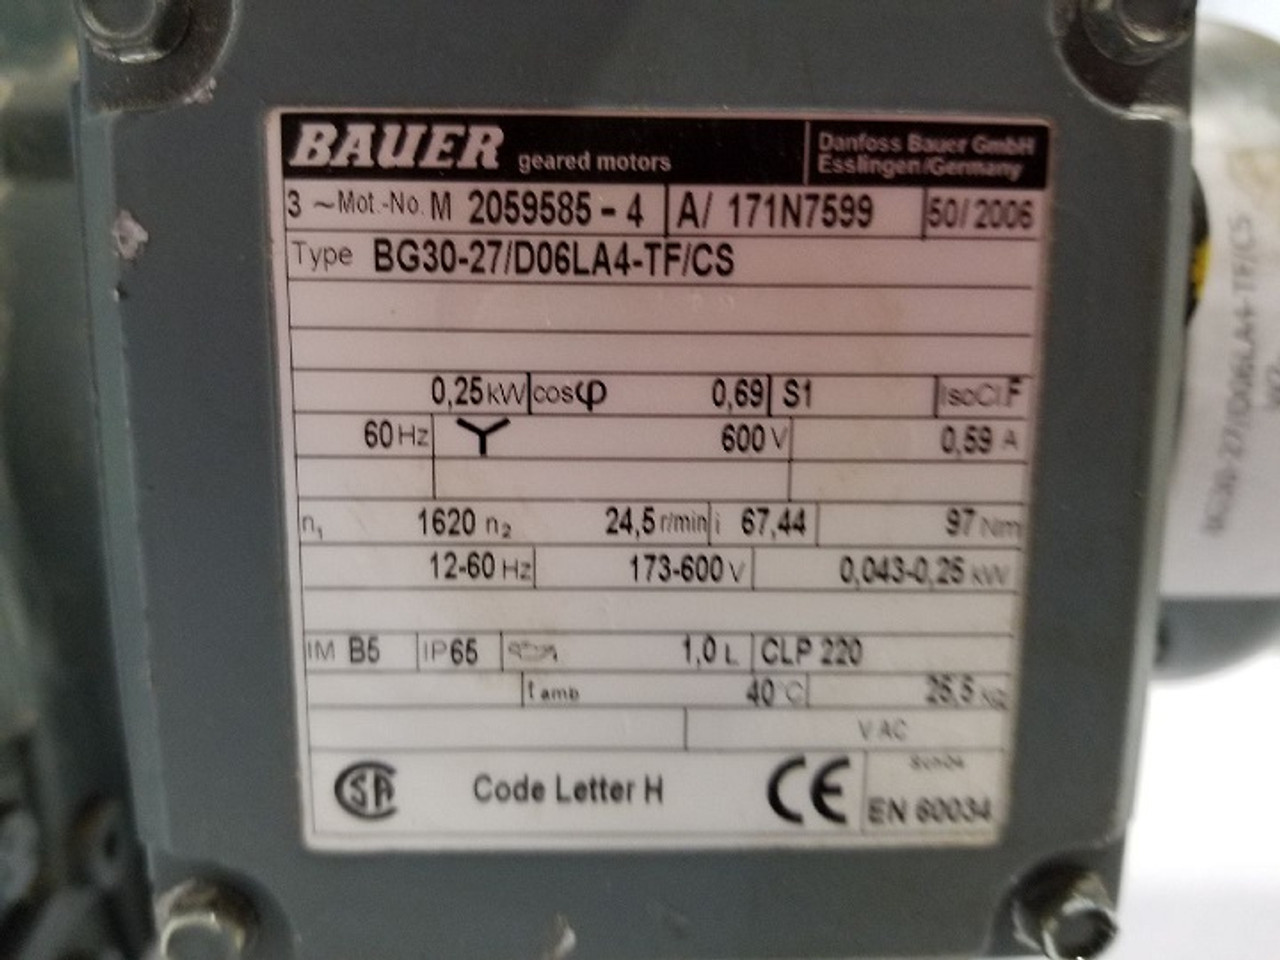 Bauer 0.043-0.25kW 24.5RPM 173-600V TEFC 3Ph 0.59A 60Hz 67.44:1 Ratio USED